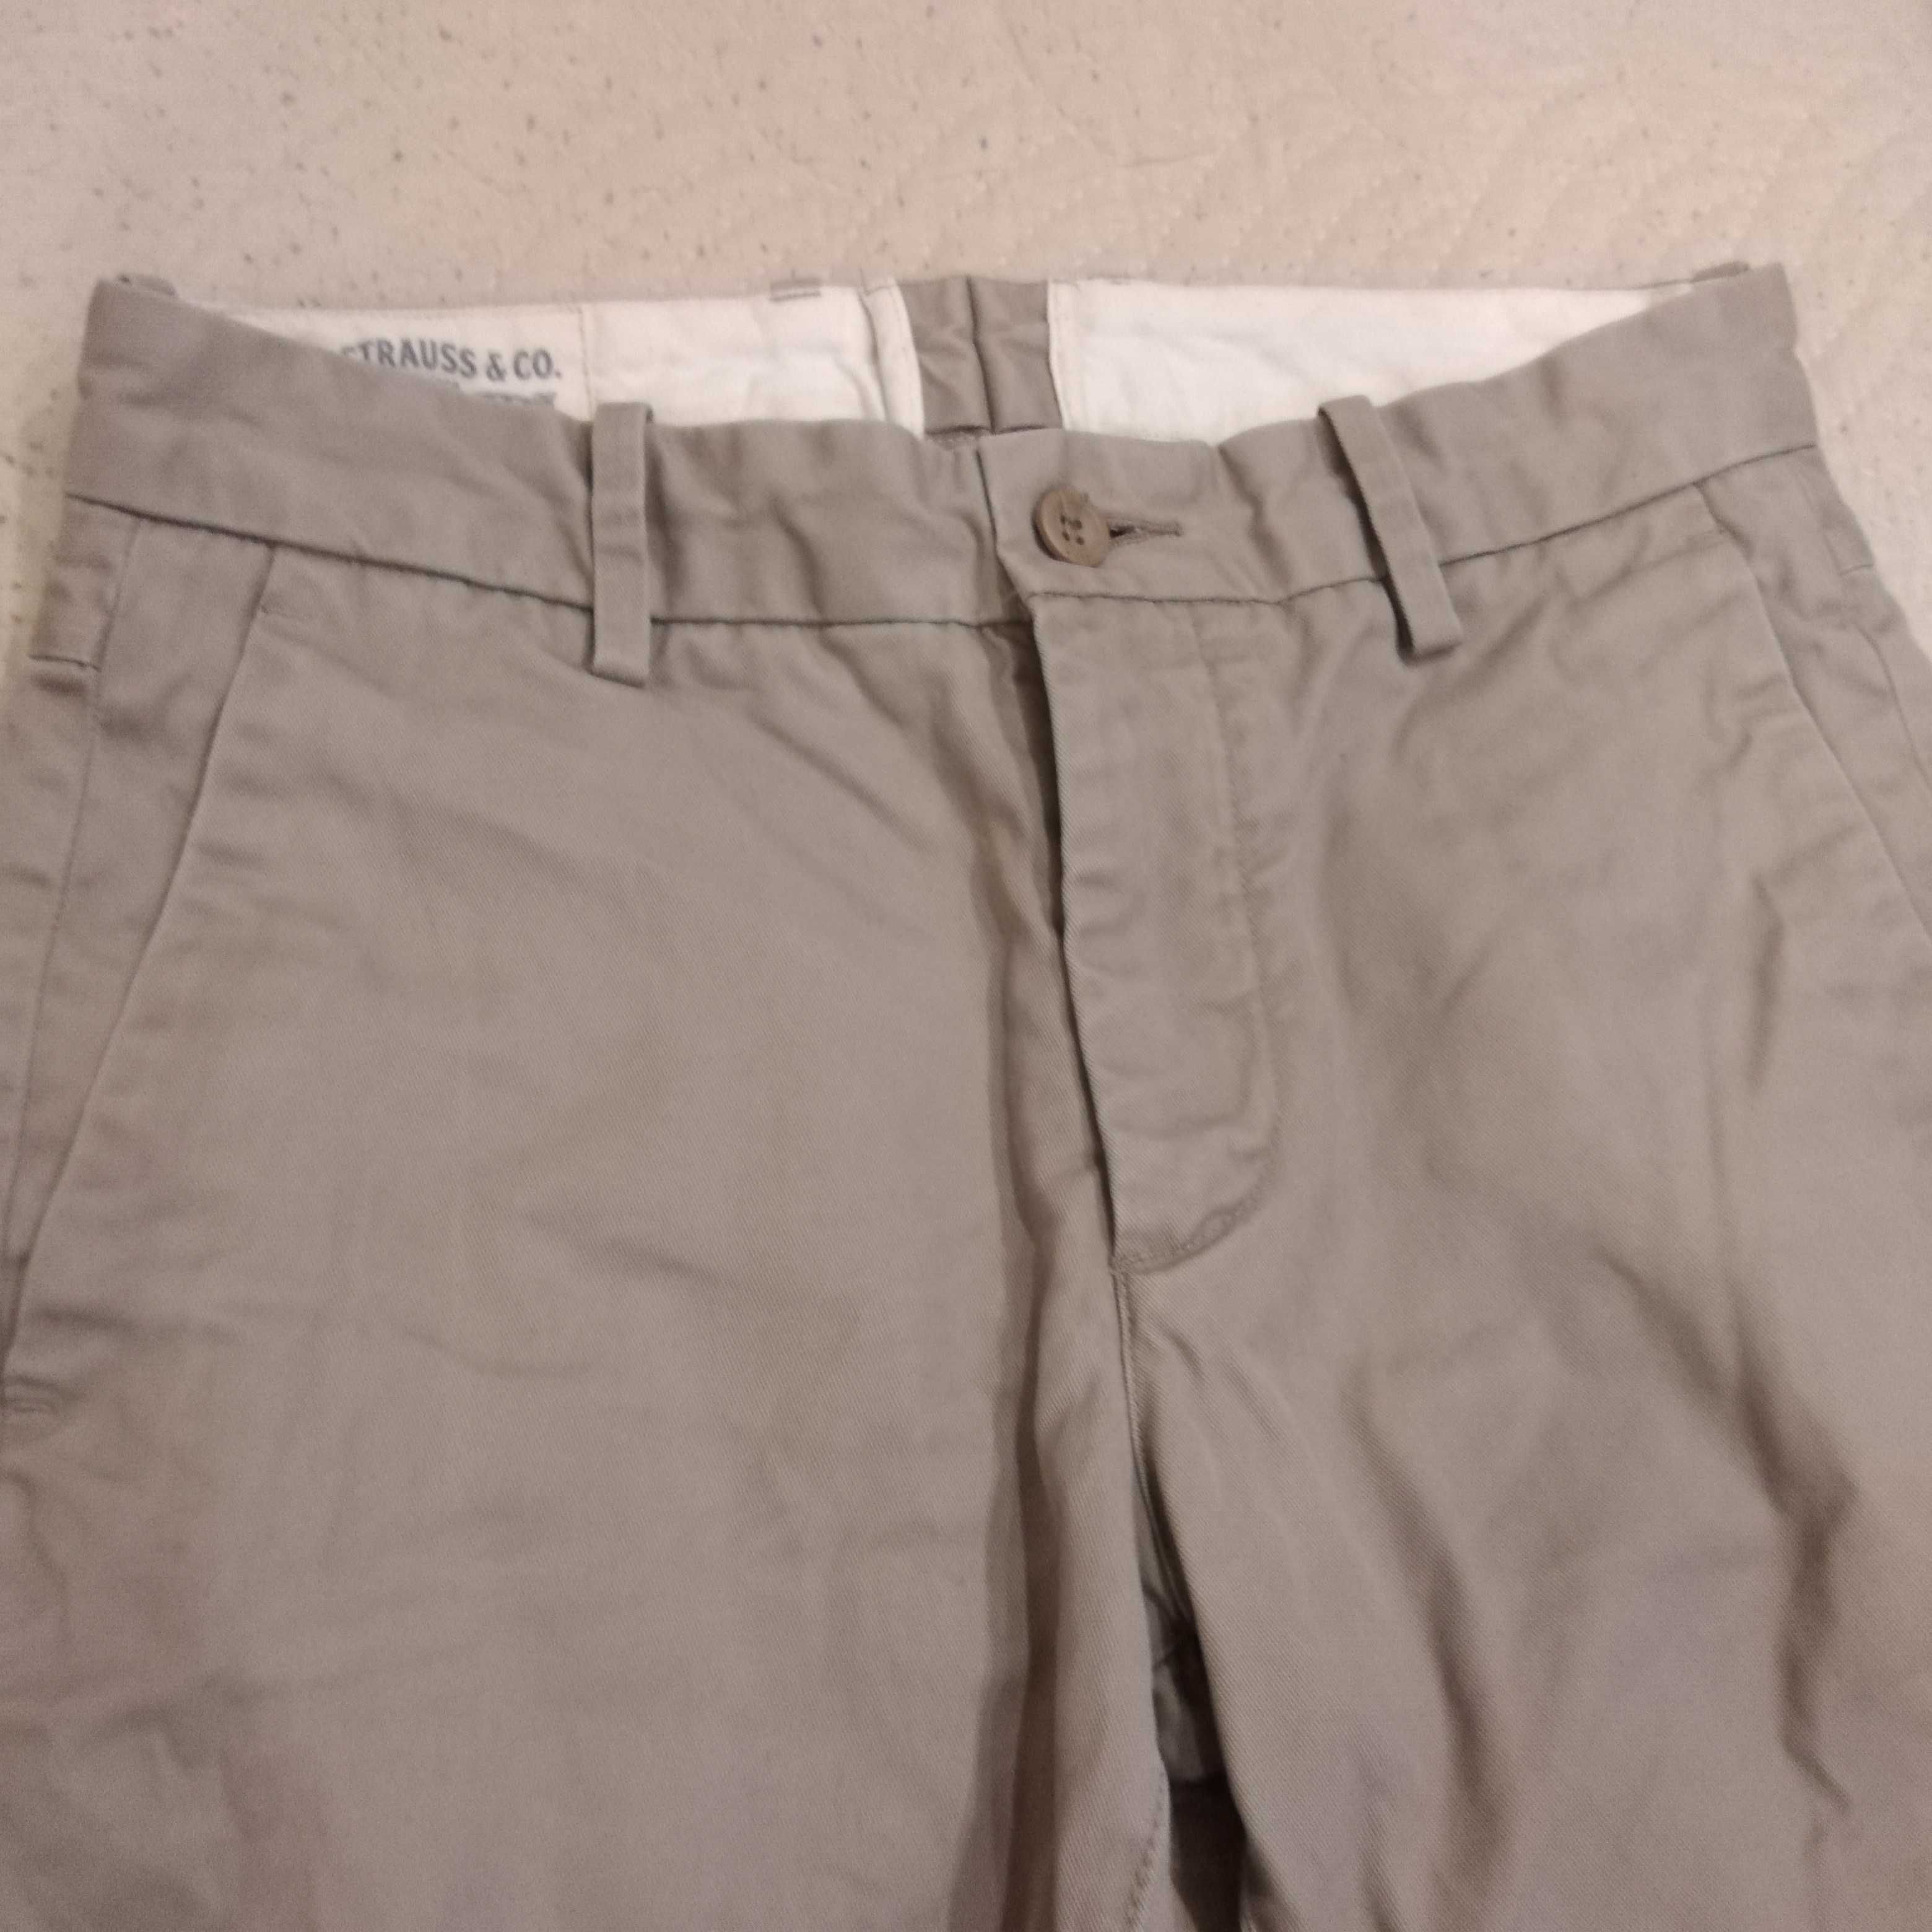 Дамски панталон Levi's, размер 28, тип дънков и дамски шлифер S размер